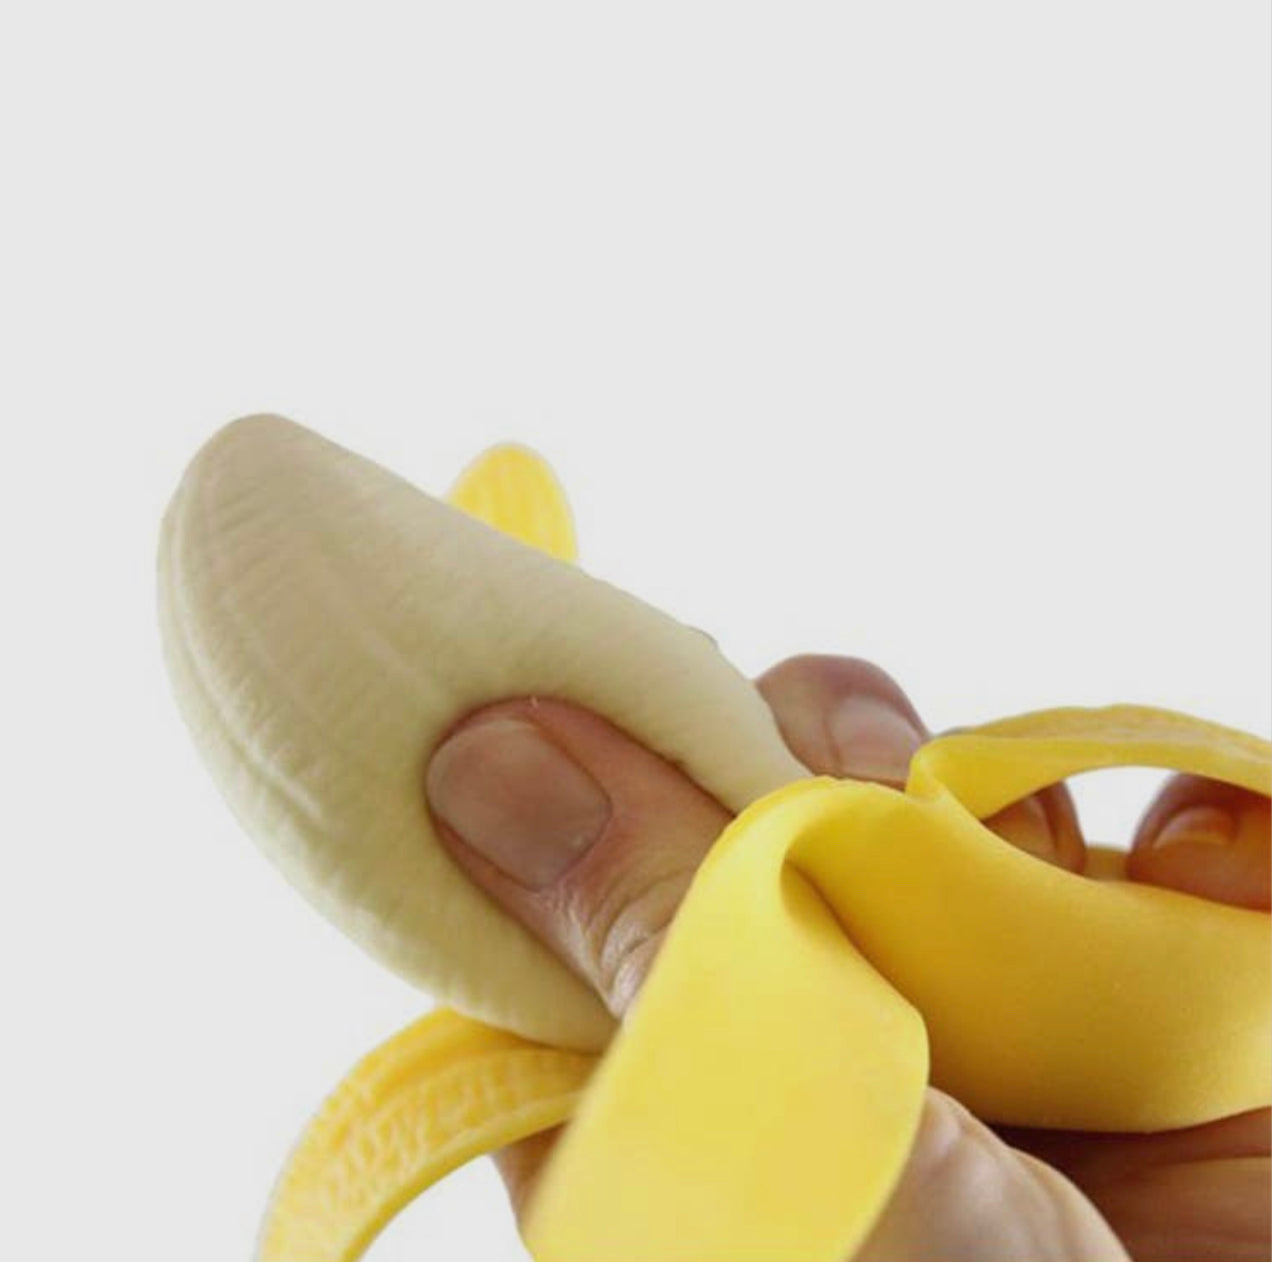 Prank & Sensory Banana